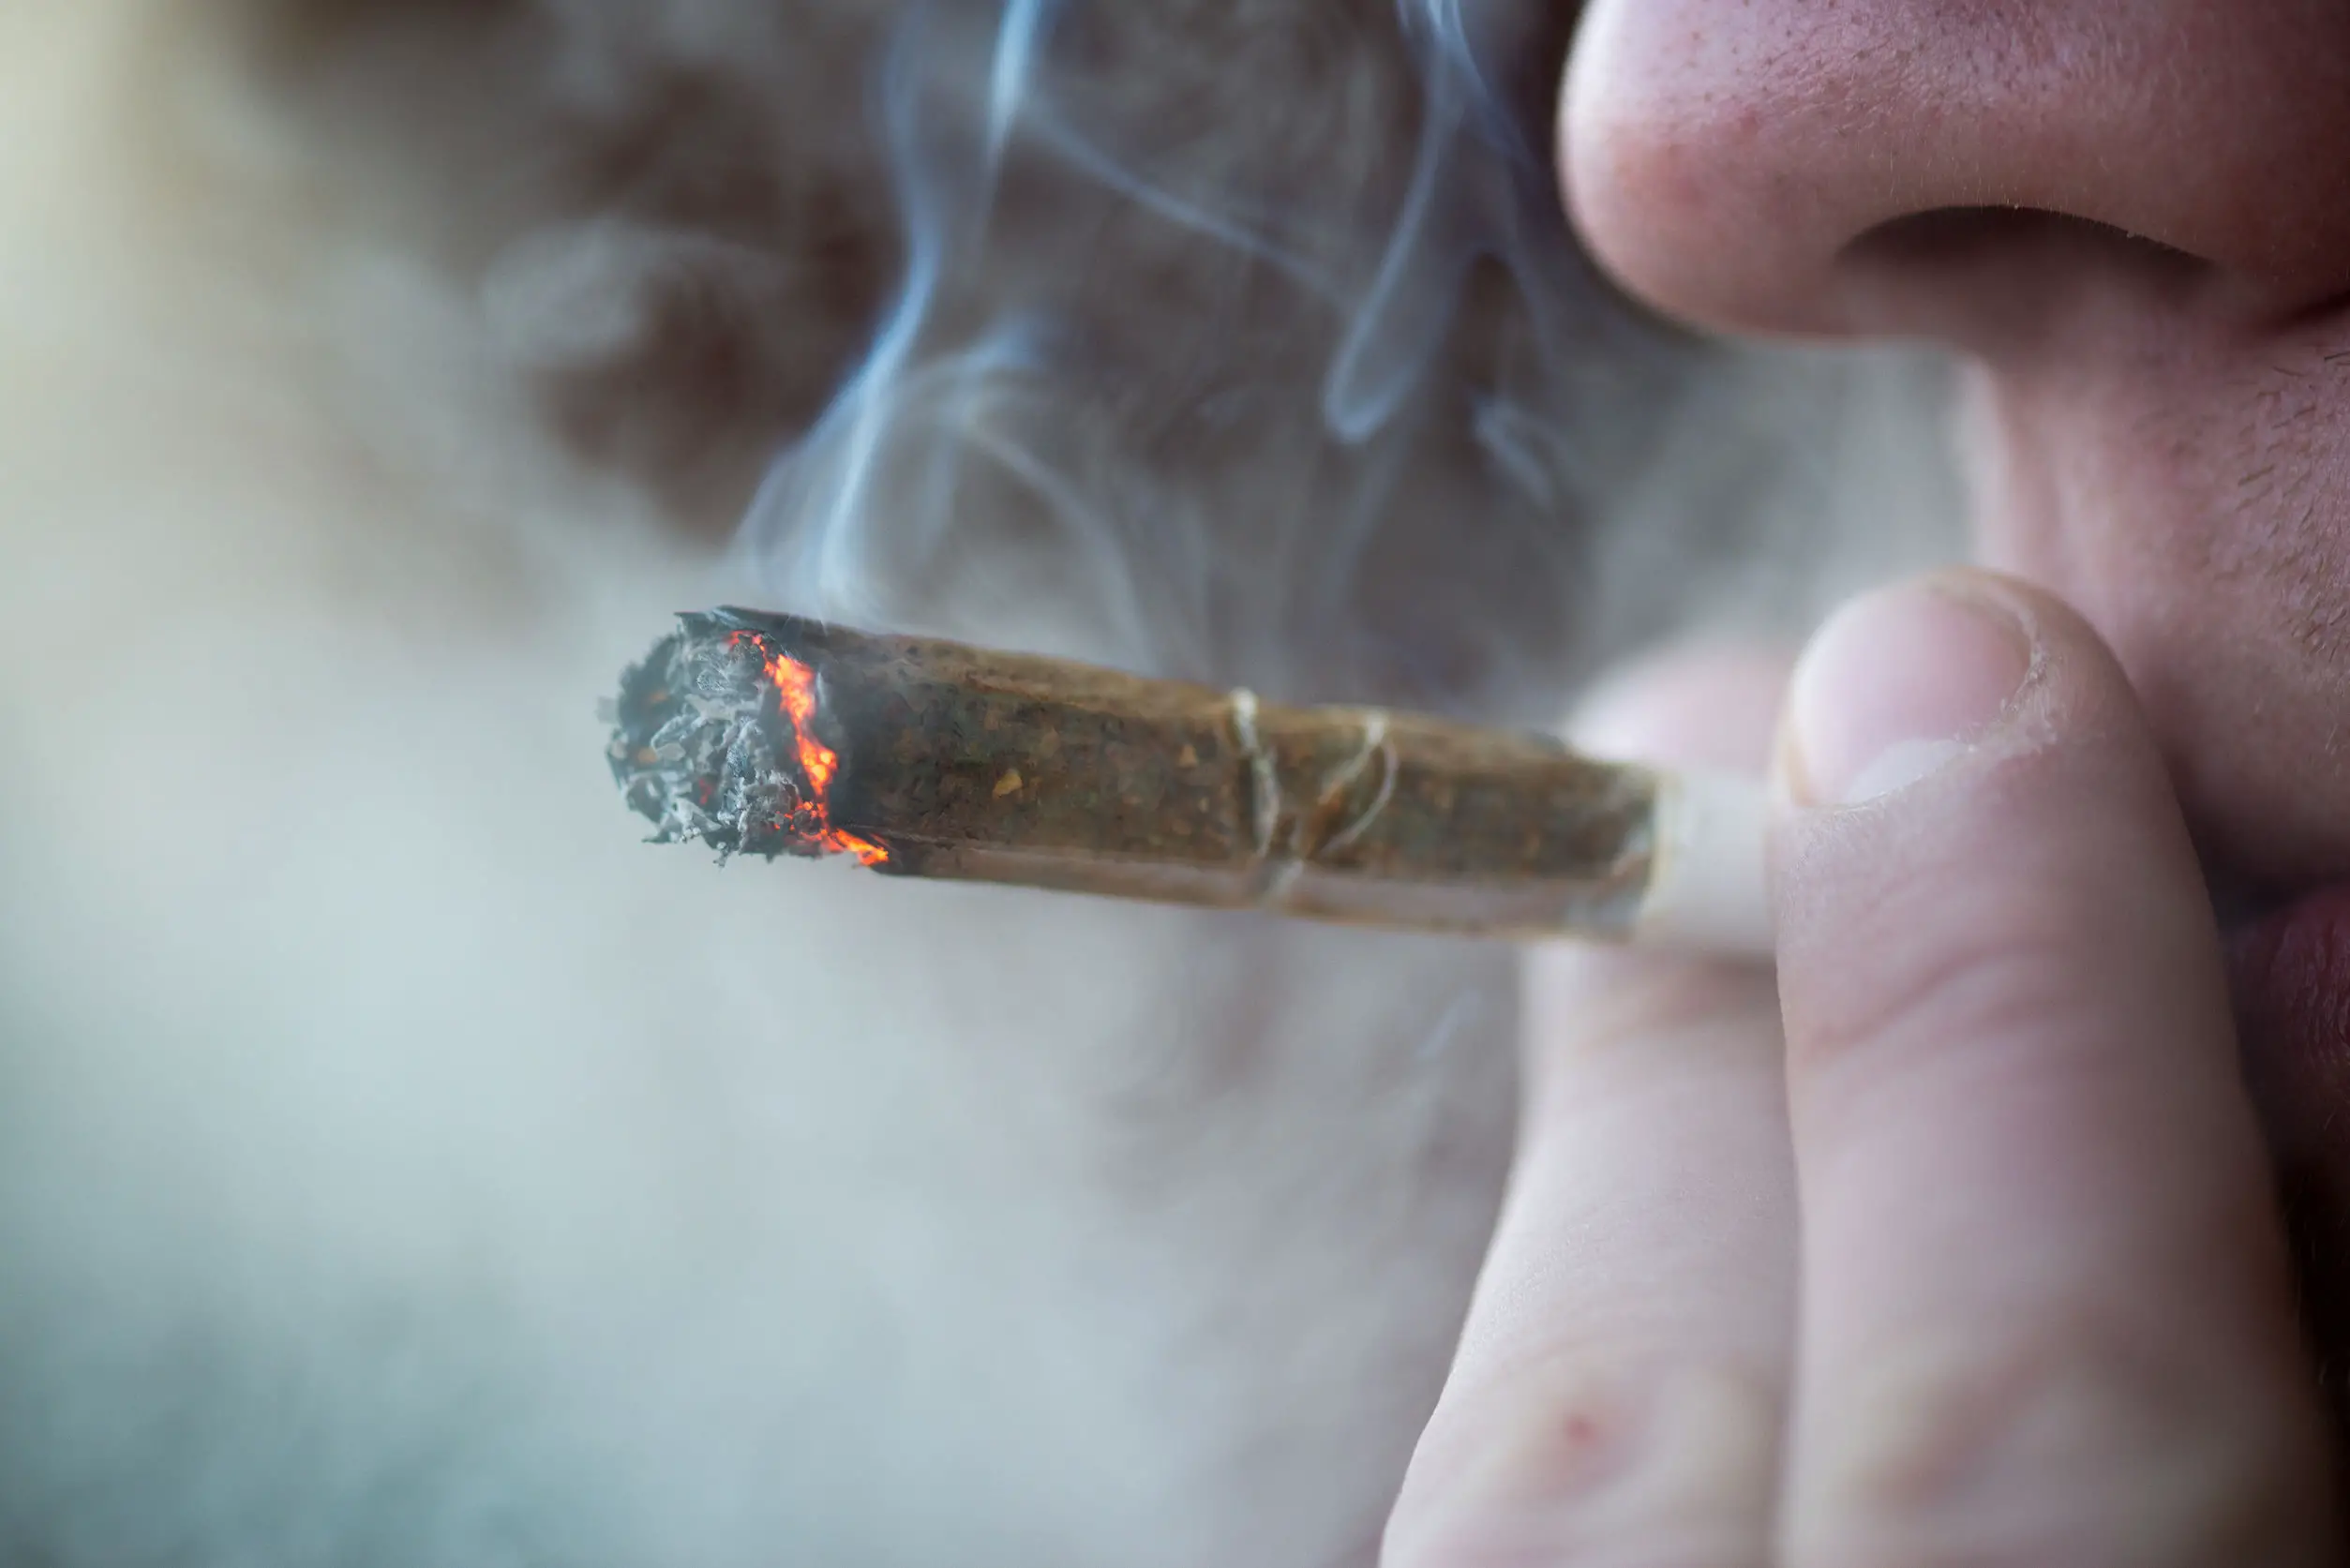 43934037 - man smoking marijuana cigarette soft drug in amsterdam, netherlands